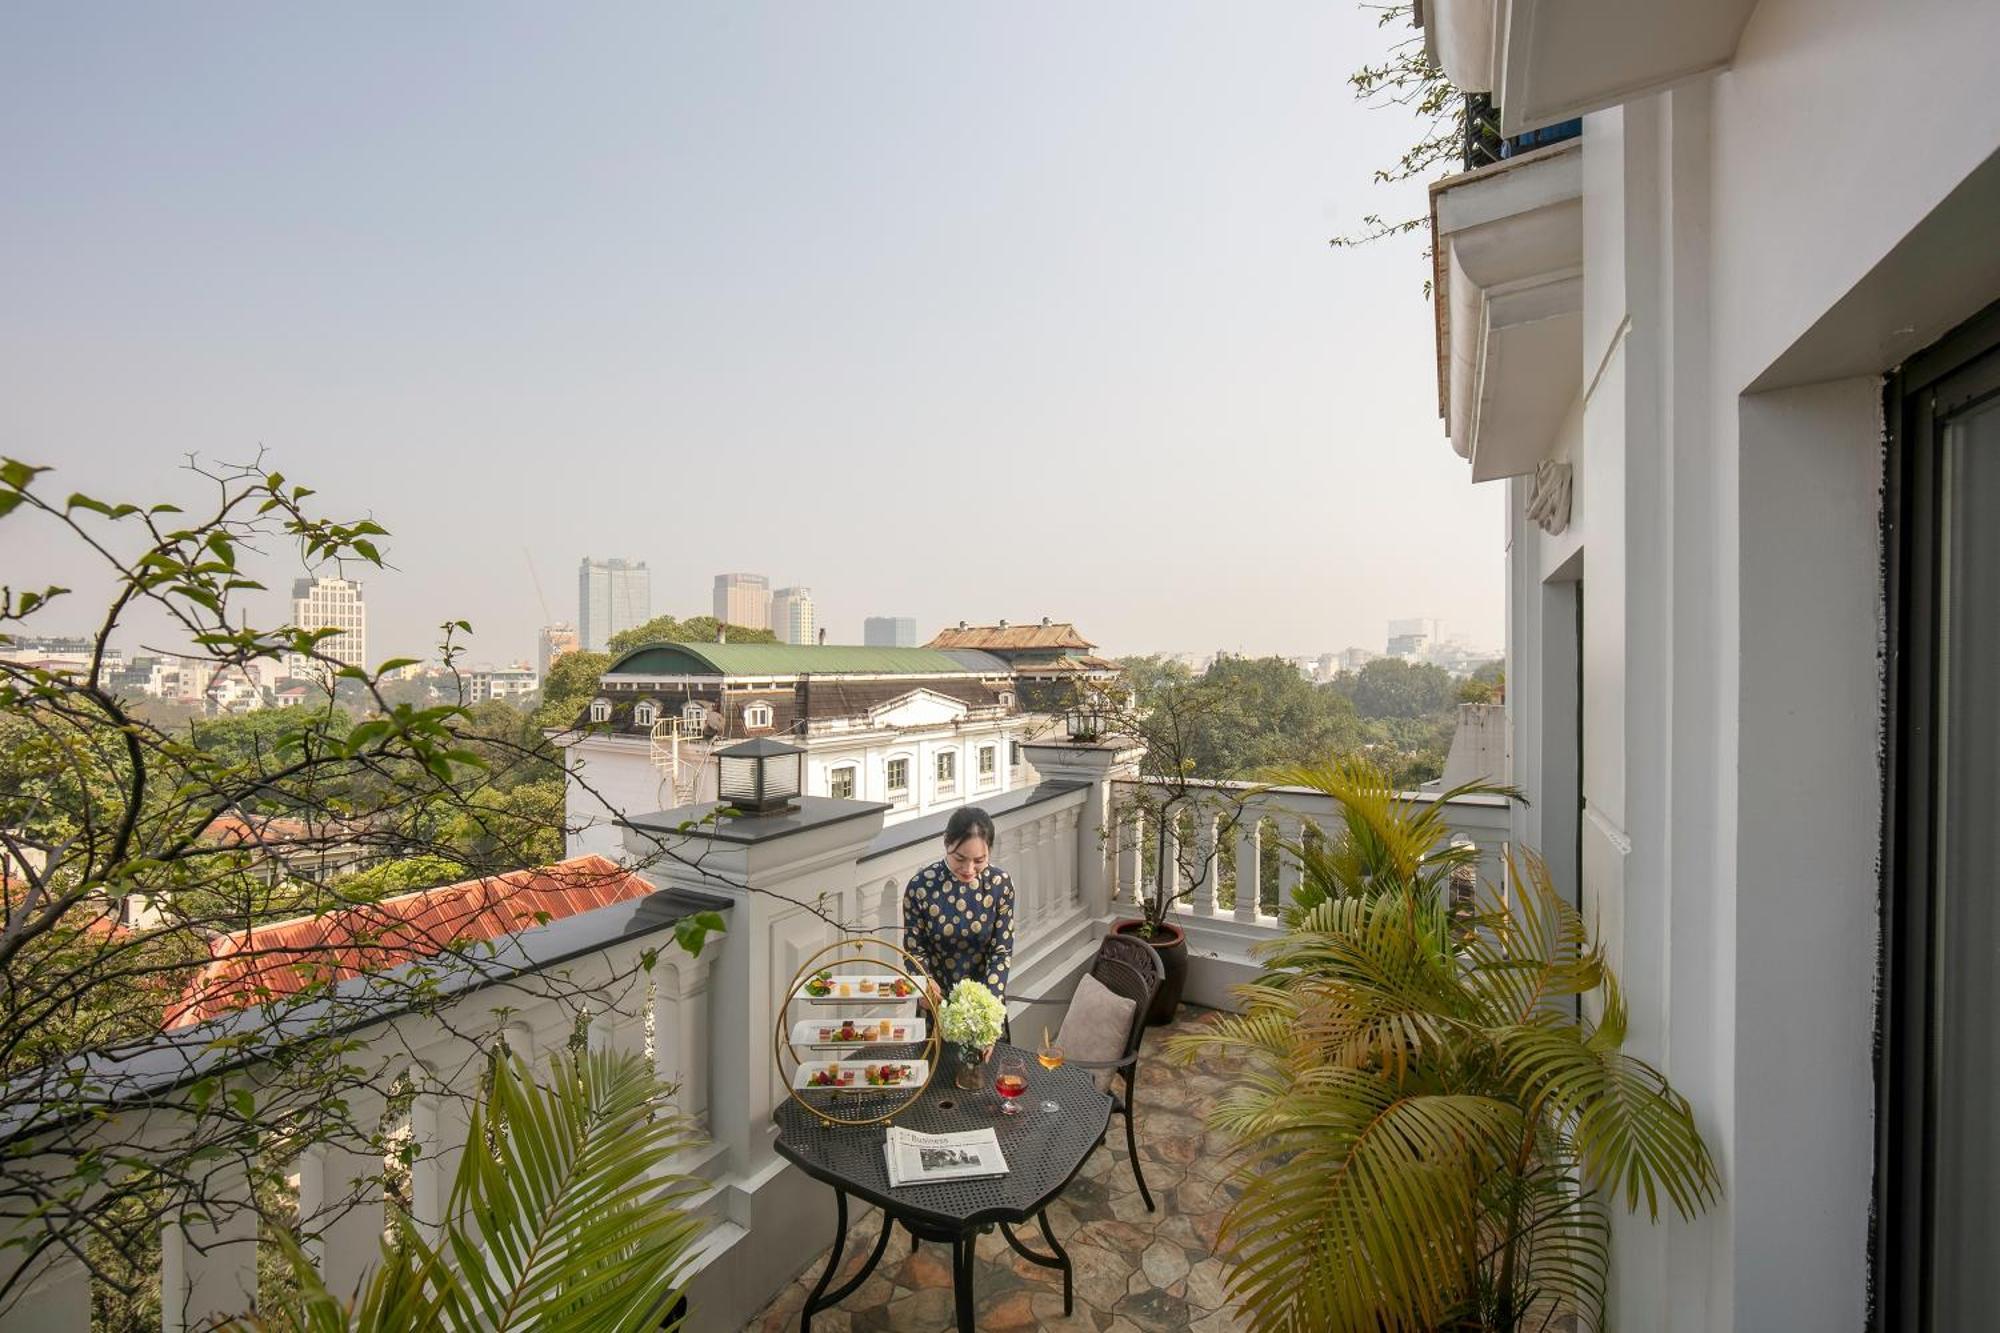 The Oriental Jade Hotel Hanoi Exterior photo